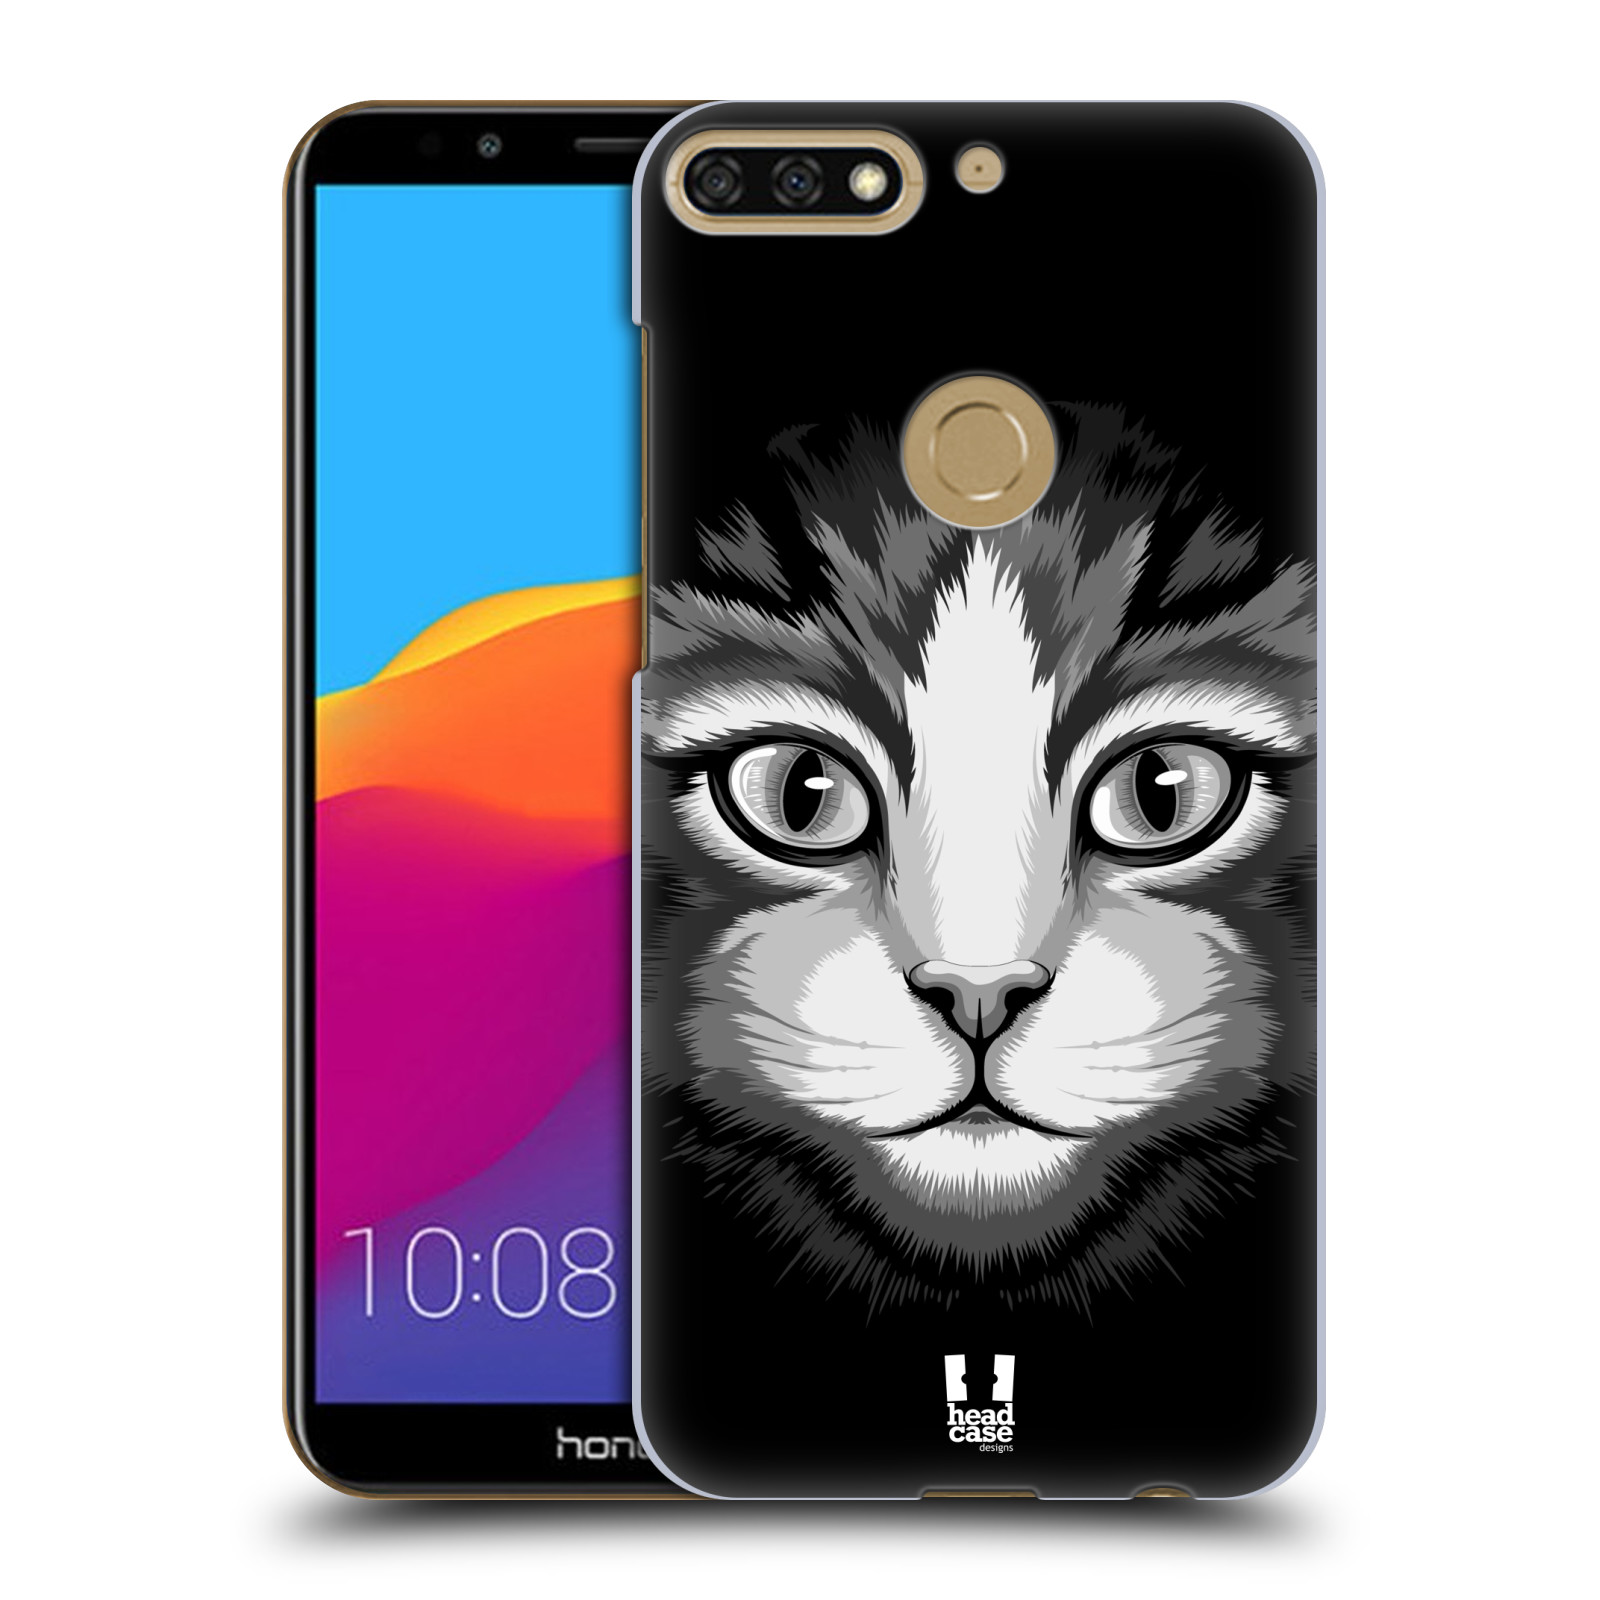 HEAD CASE plastový obal na mobil Honor 7c vzor Zvíře kreslená tvář 2 kočička